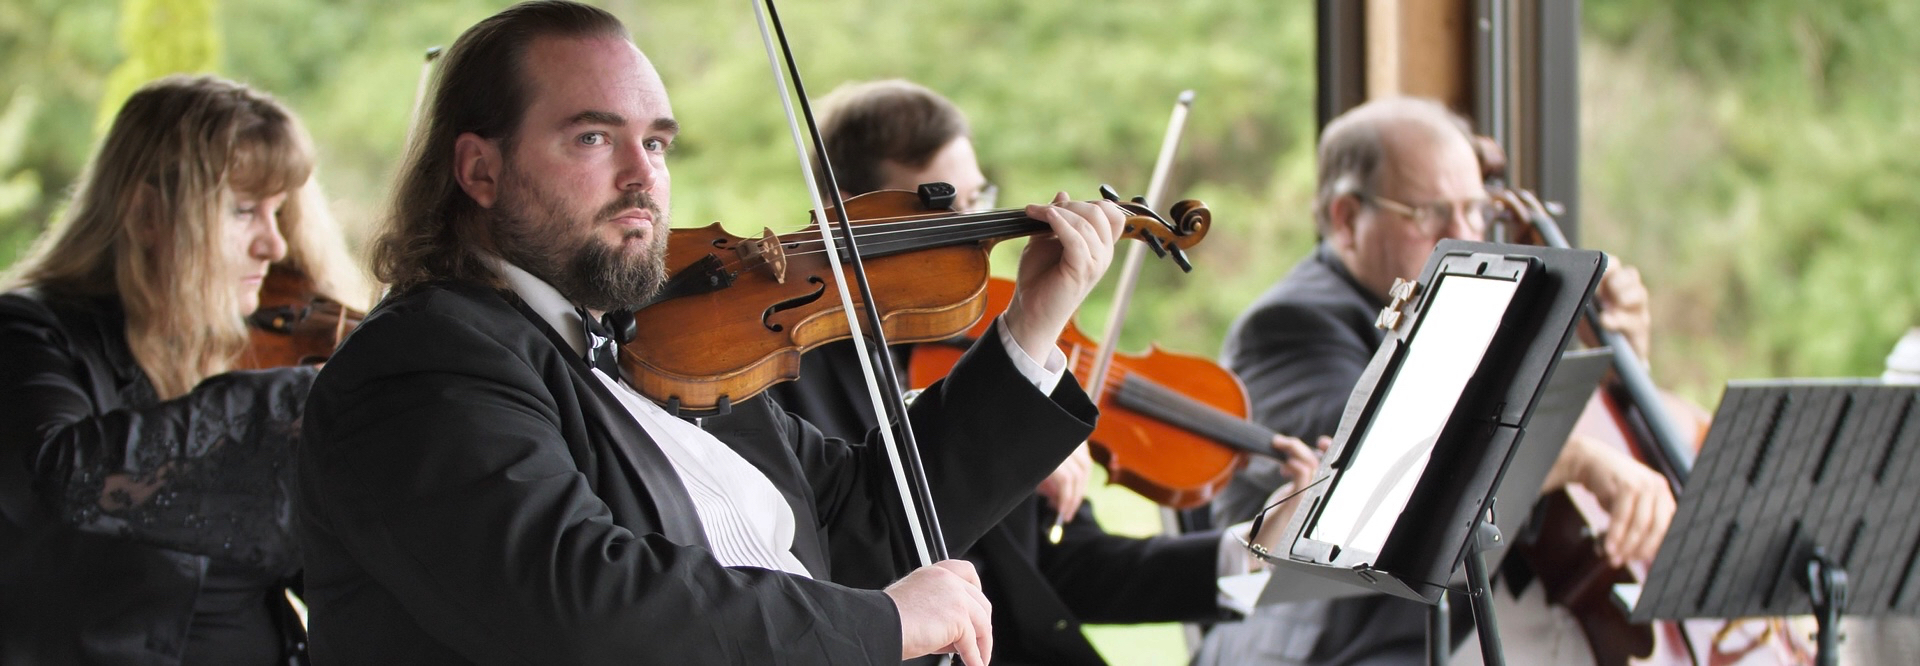 String Quartet St Louis | Weddings | The Matt McCallie Orchestra